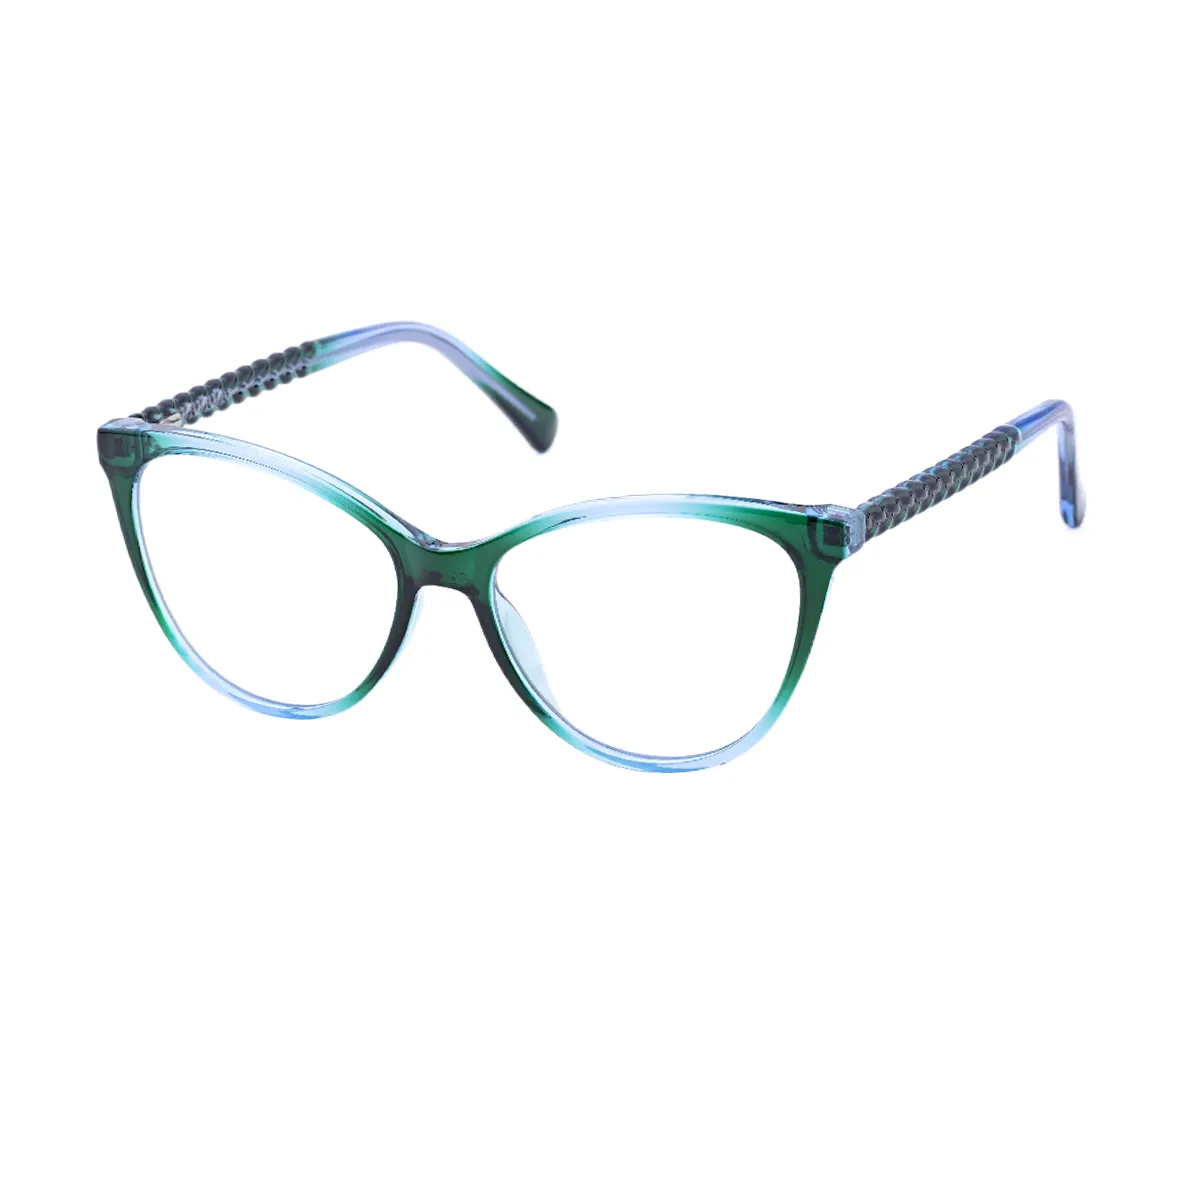 Betsy - Cat-eye Transparent Green/Blue Glasses for Women - EFE